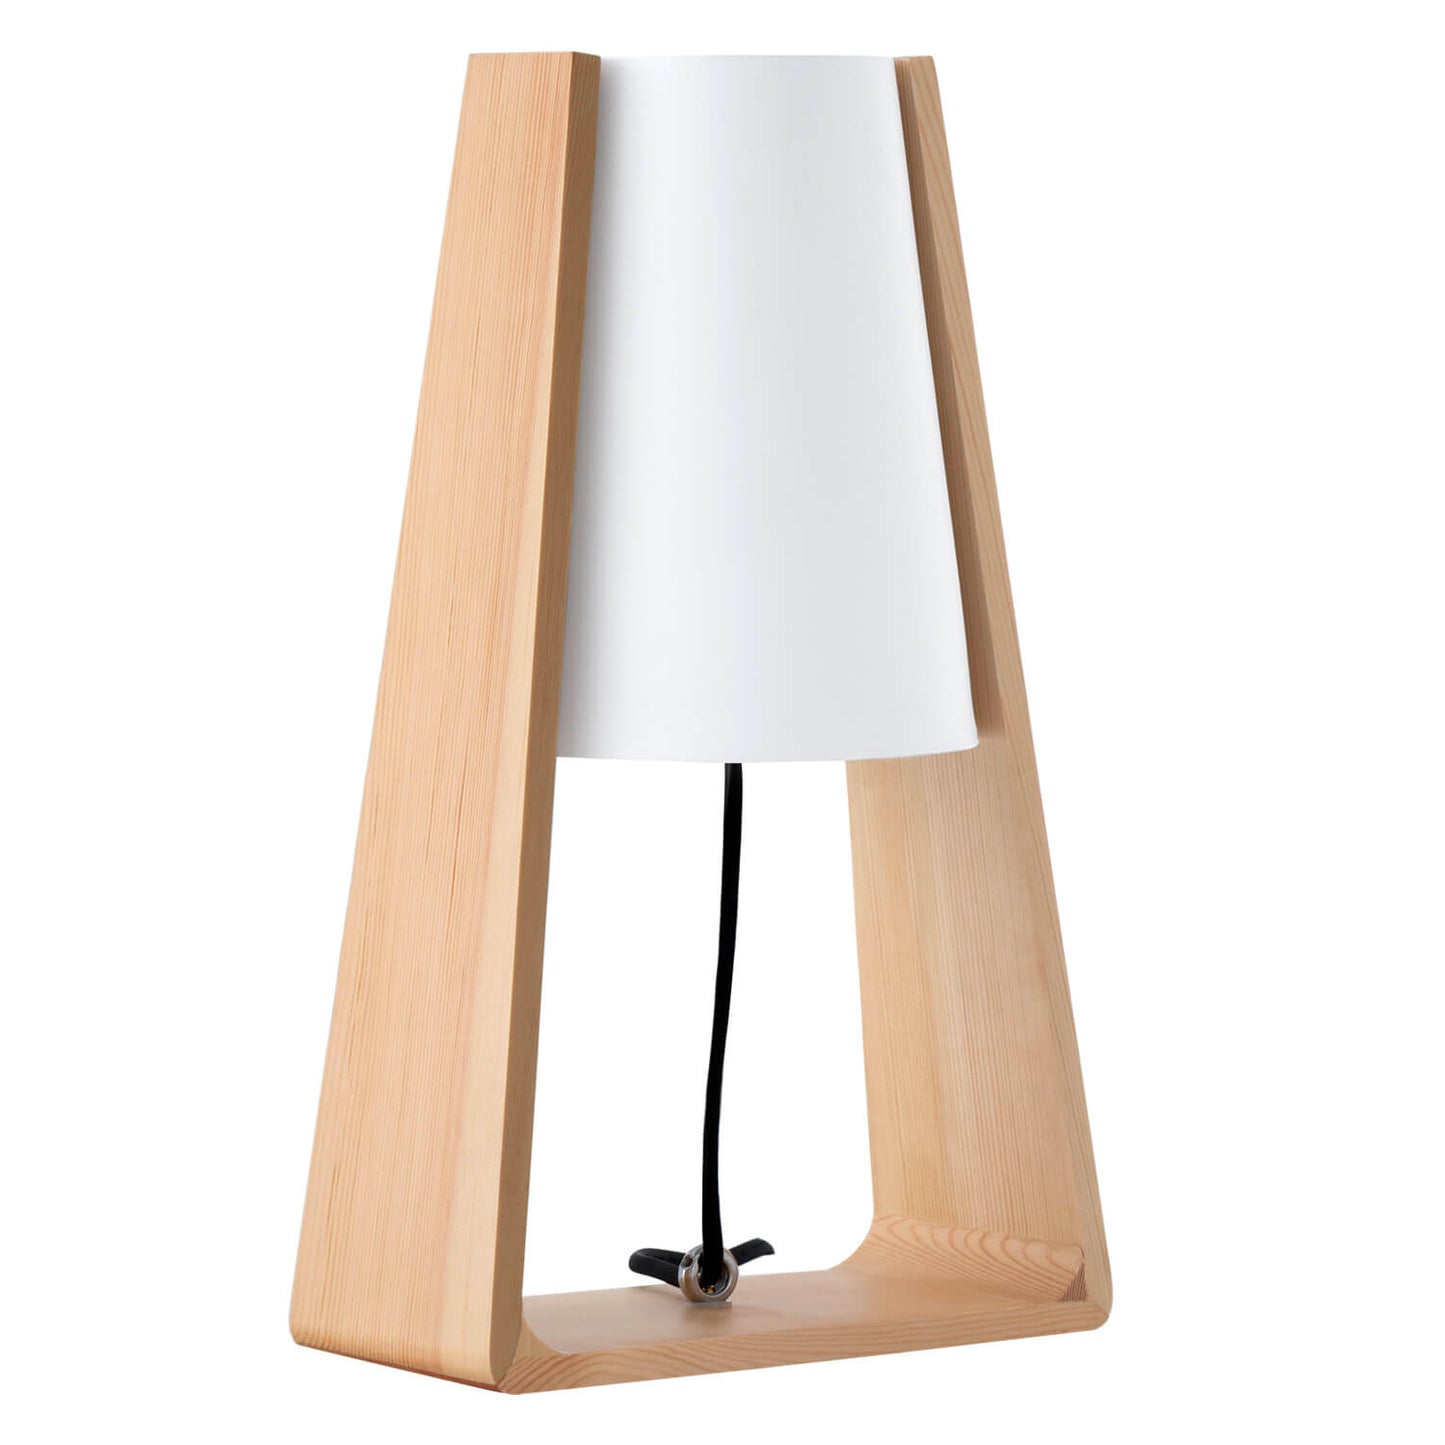 Zular table lamp